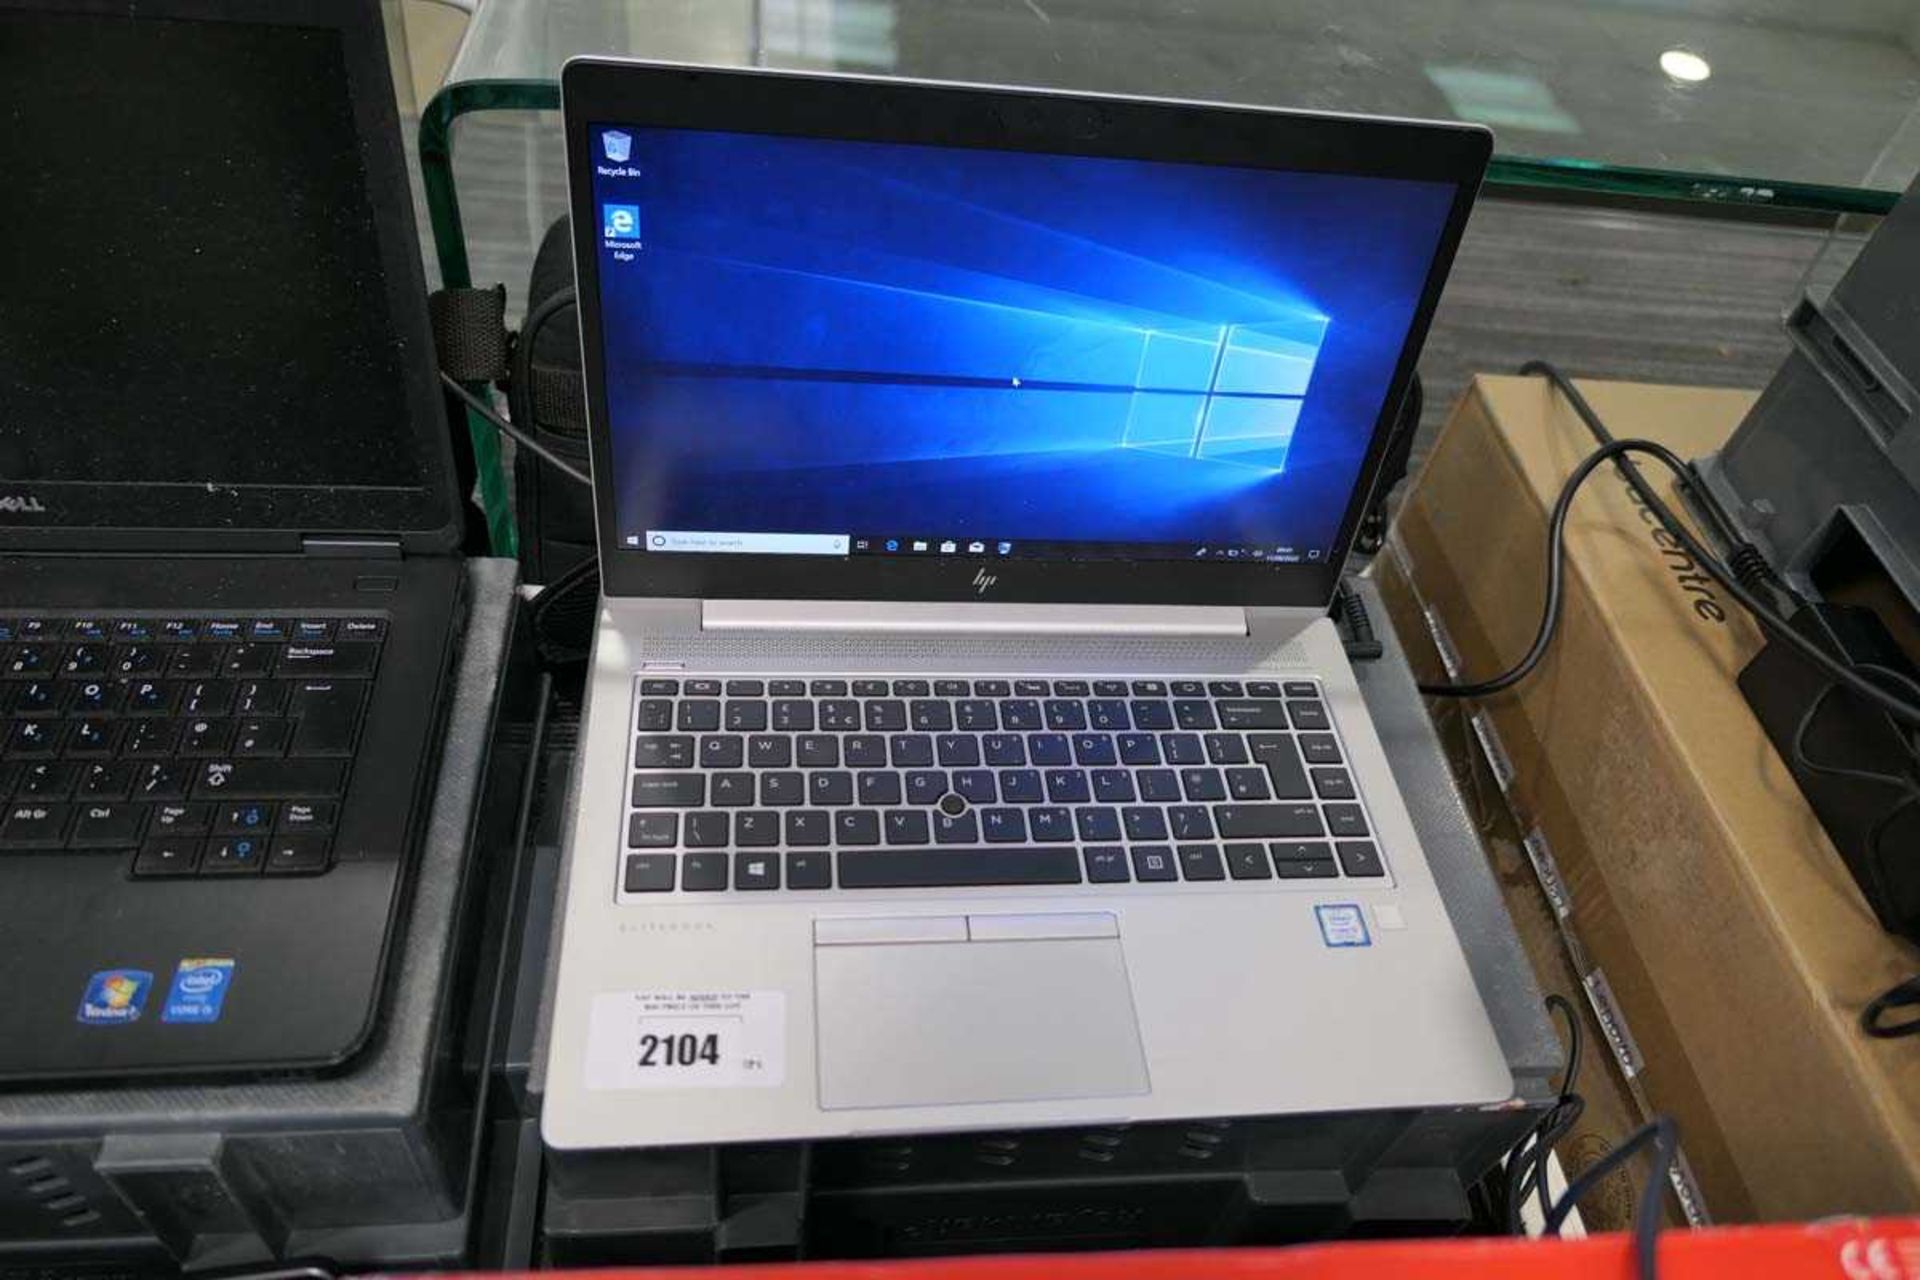 +VAT HP Elite book 840G5 laptop with Intel i5 8th generation processor, 8gb RAM, 256gb storage,